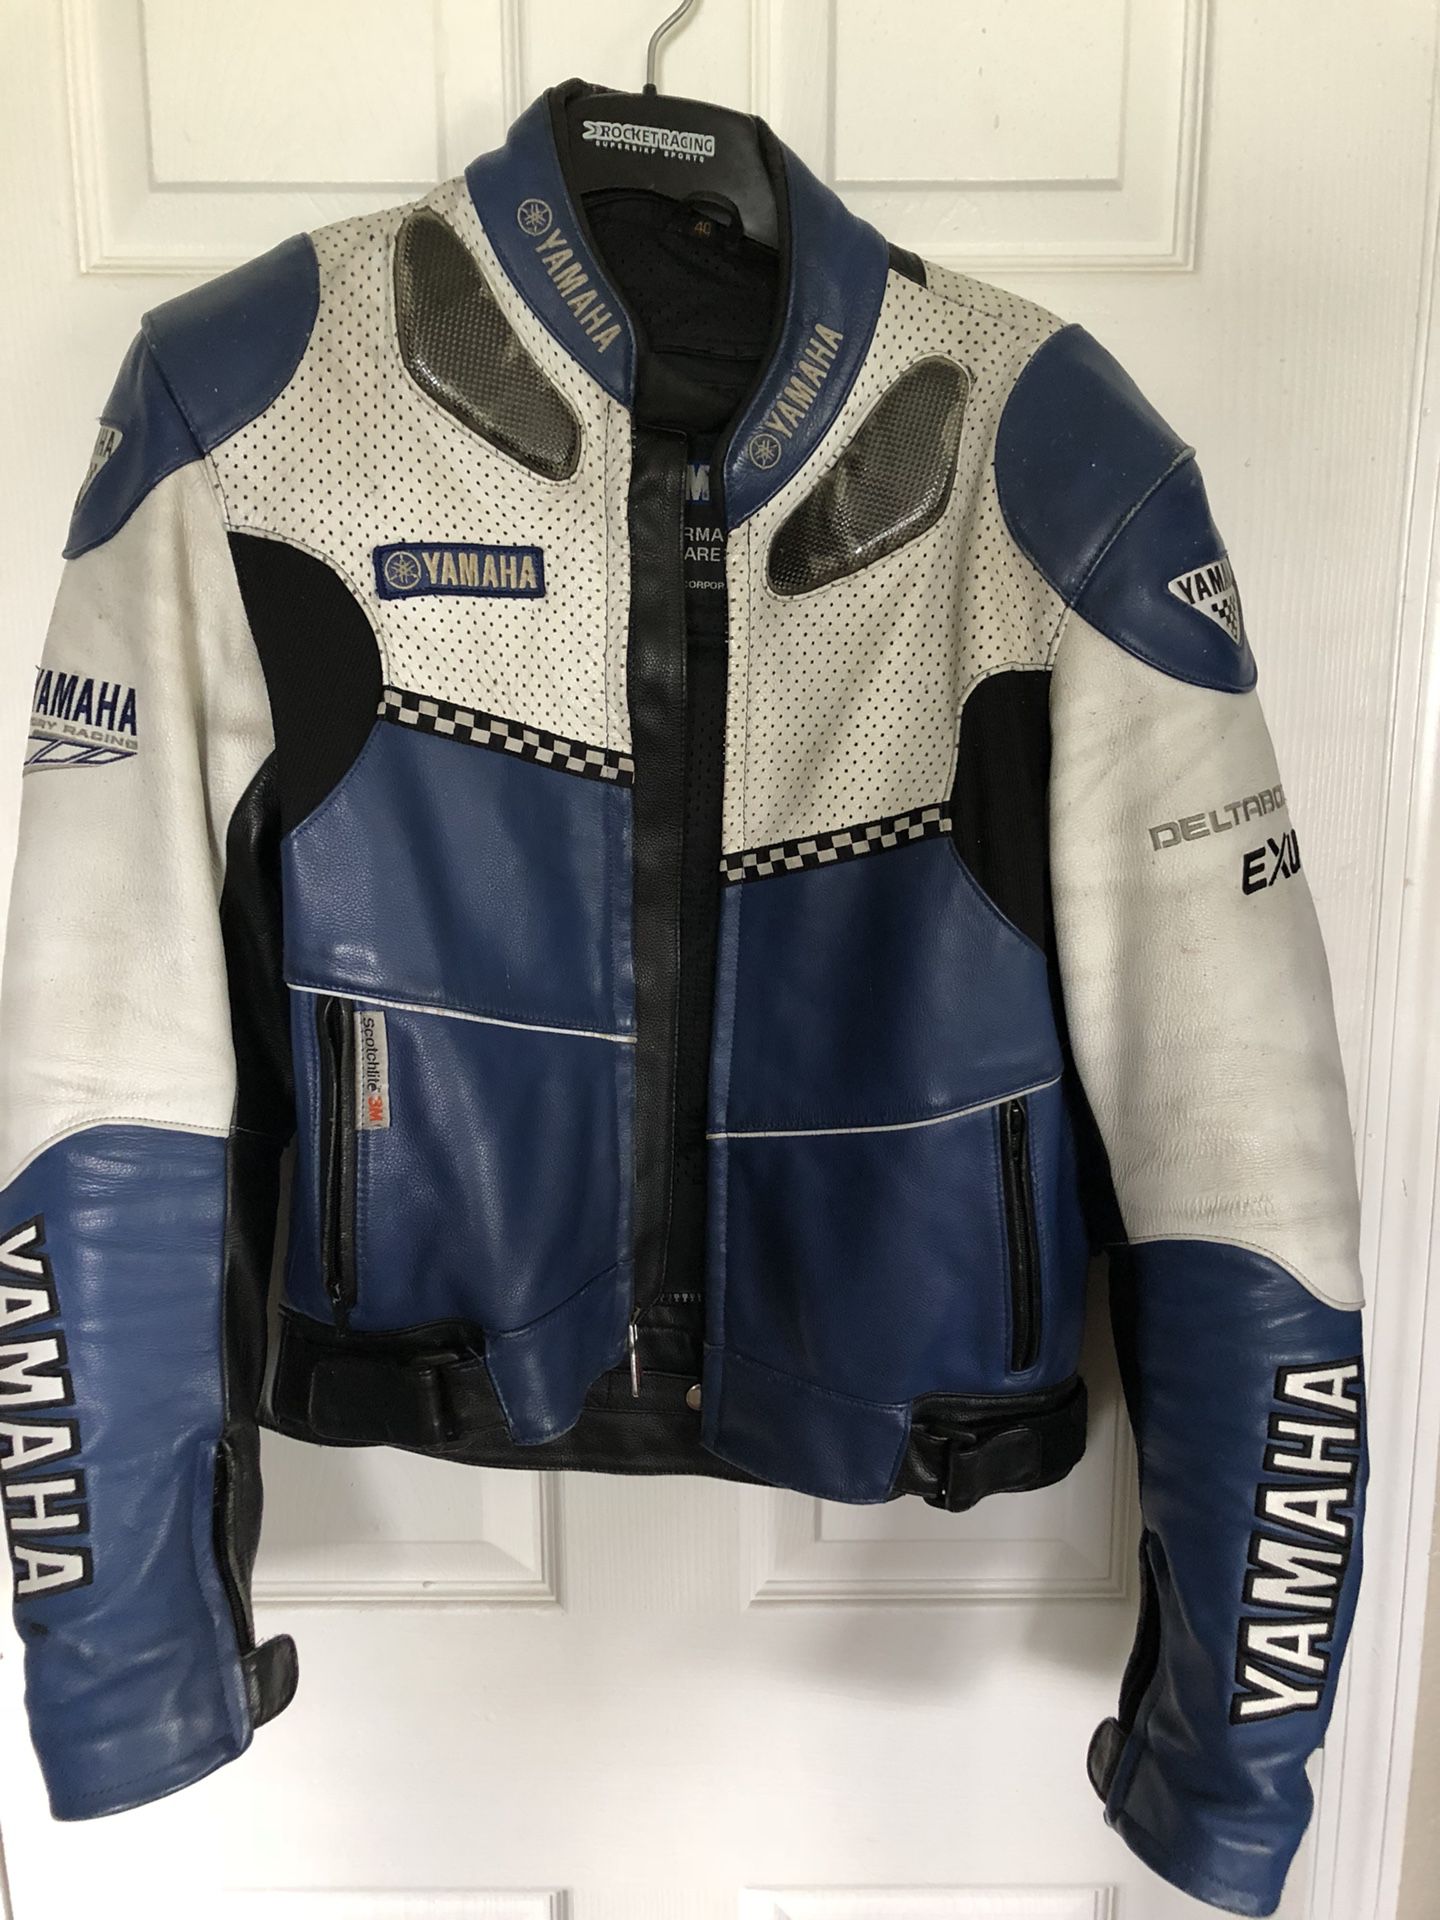 Vintage genuine Yamaha perforated leather motorcycle jacket. Size 40, rare find!